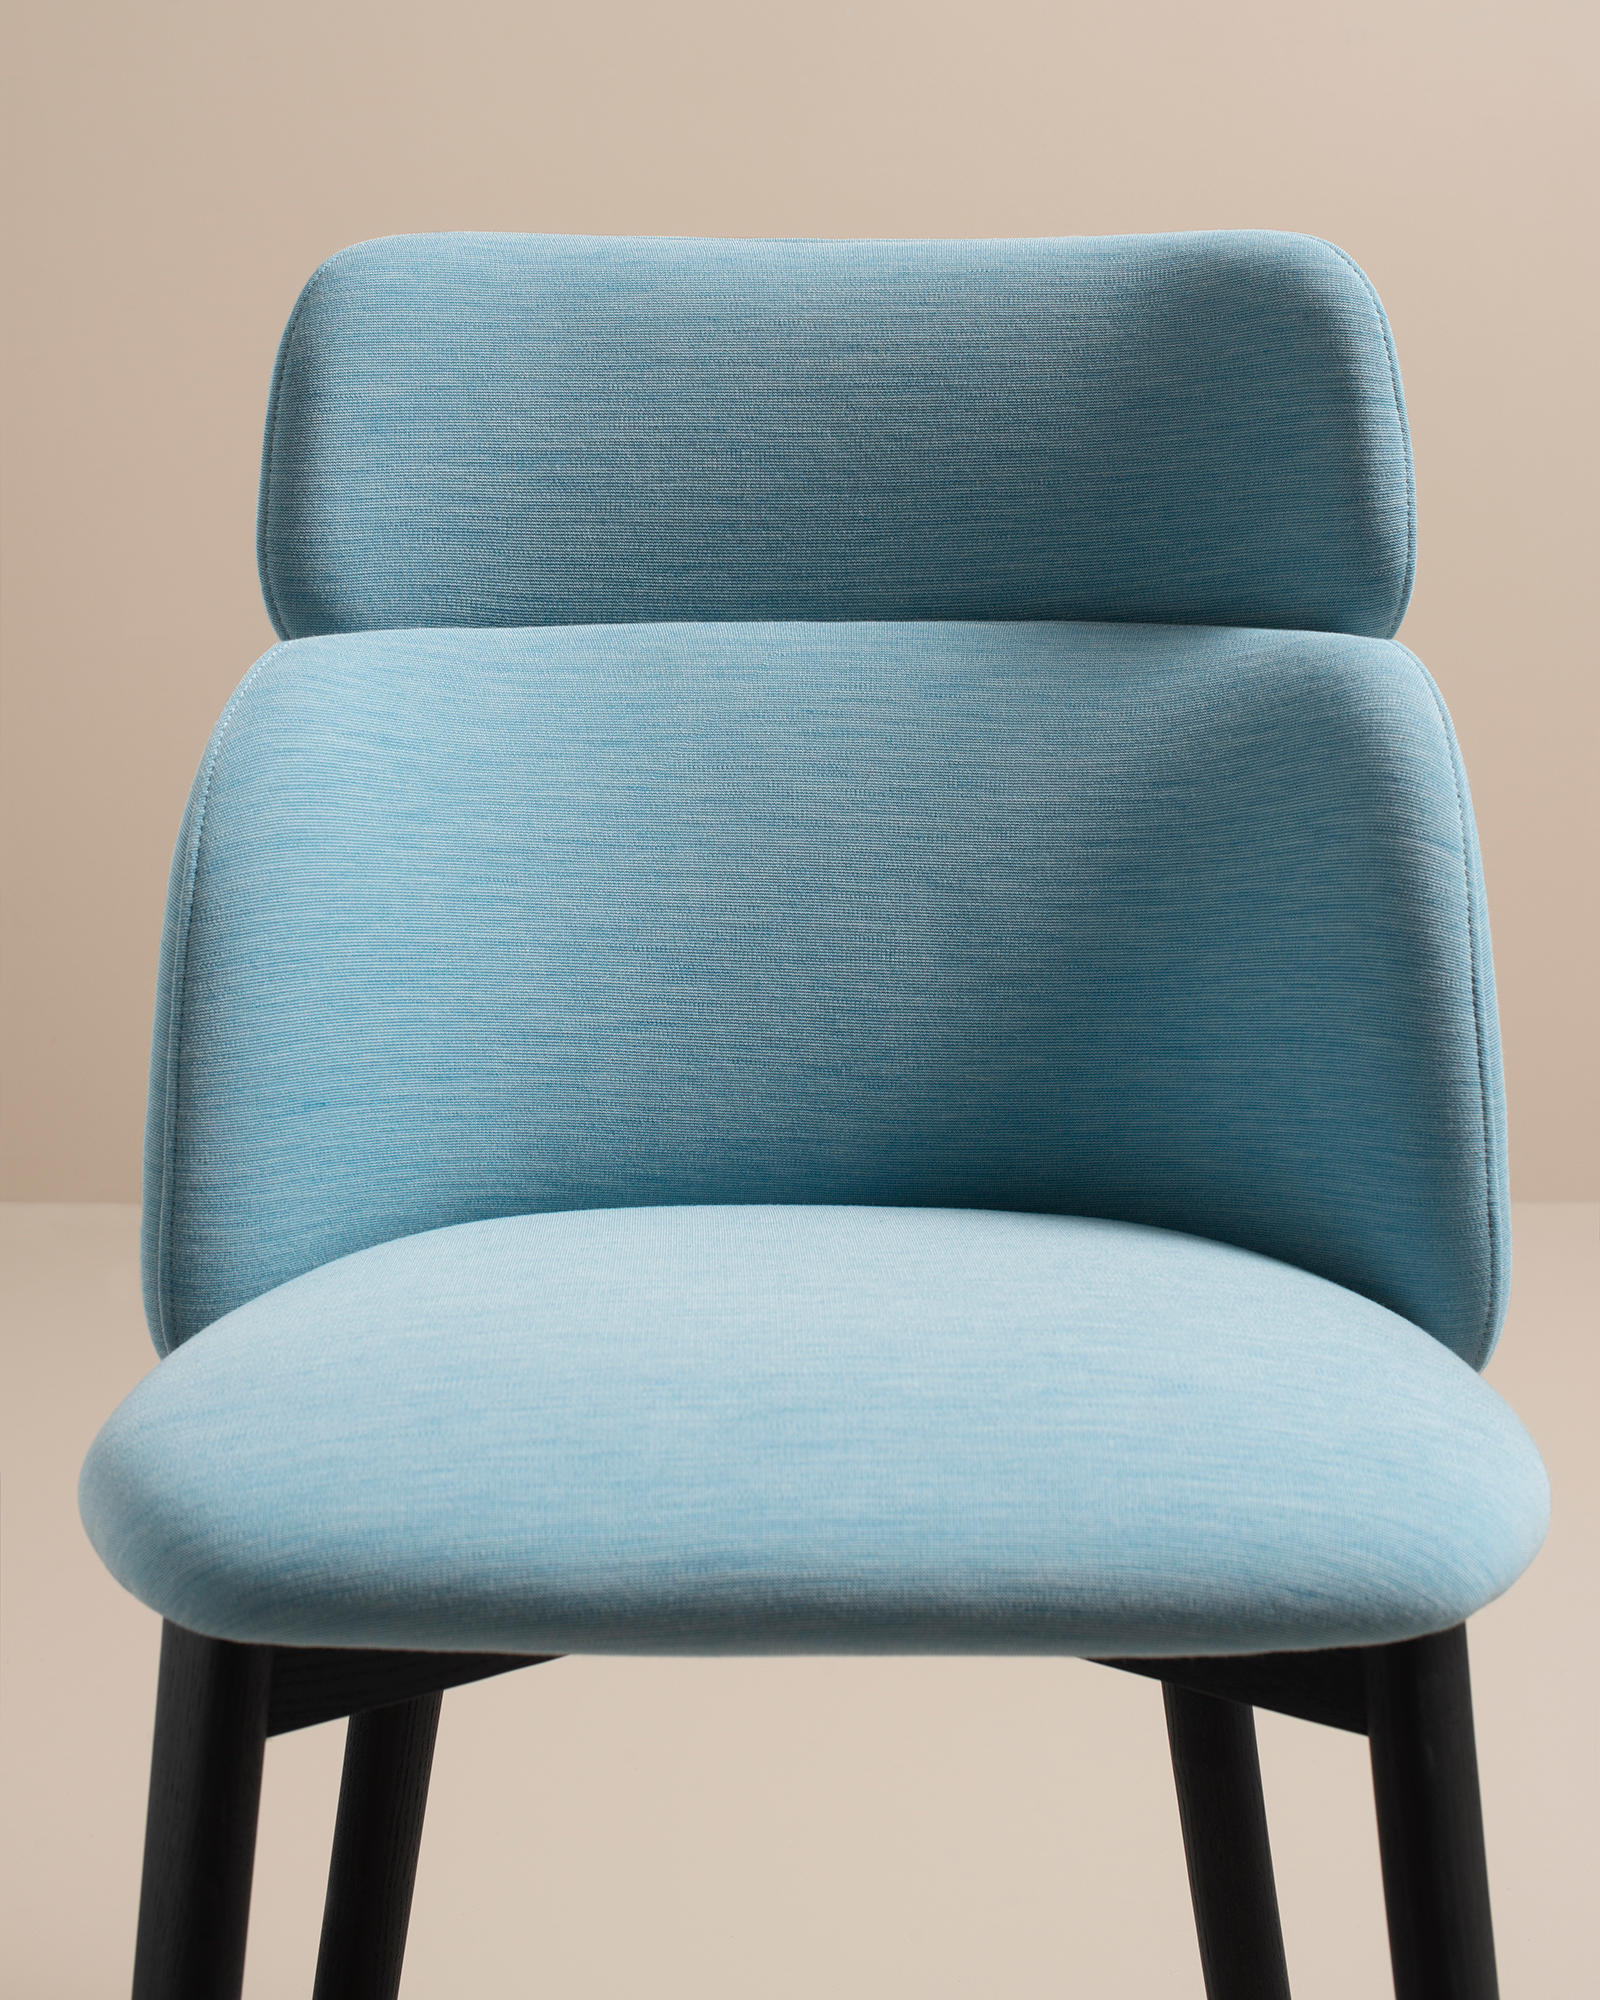 TUILLI Chair 1.03.0-X & designer furniture | Architonic